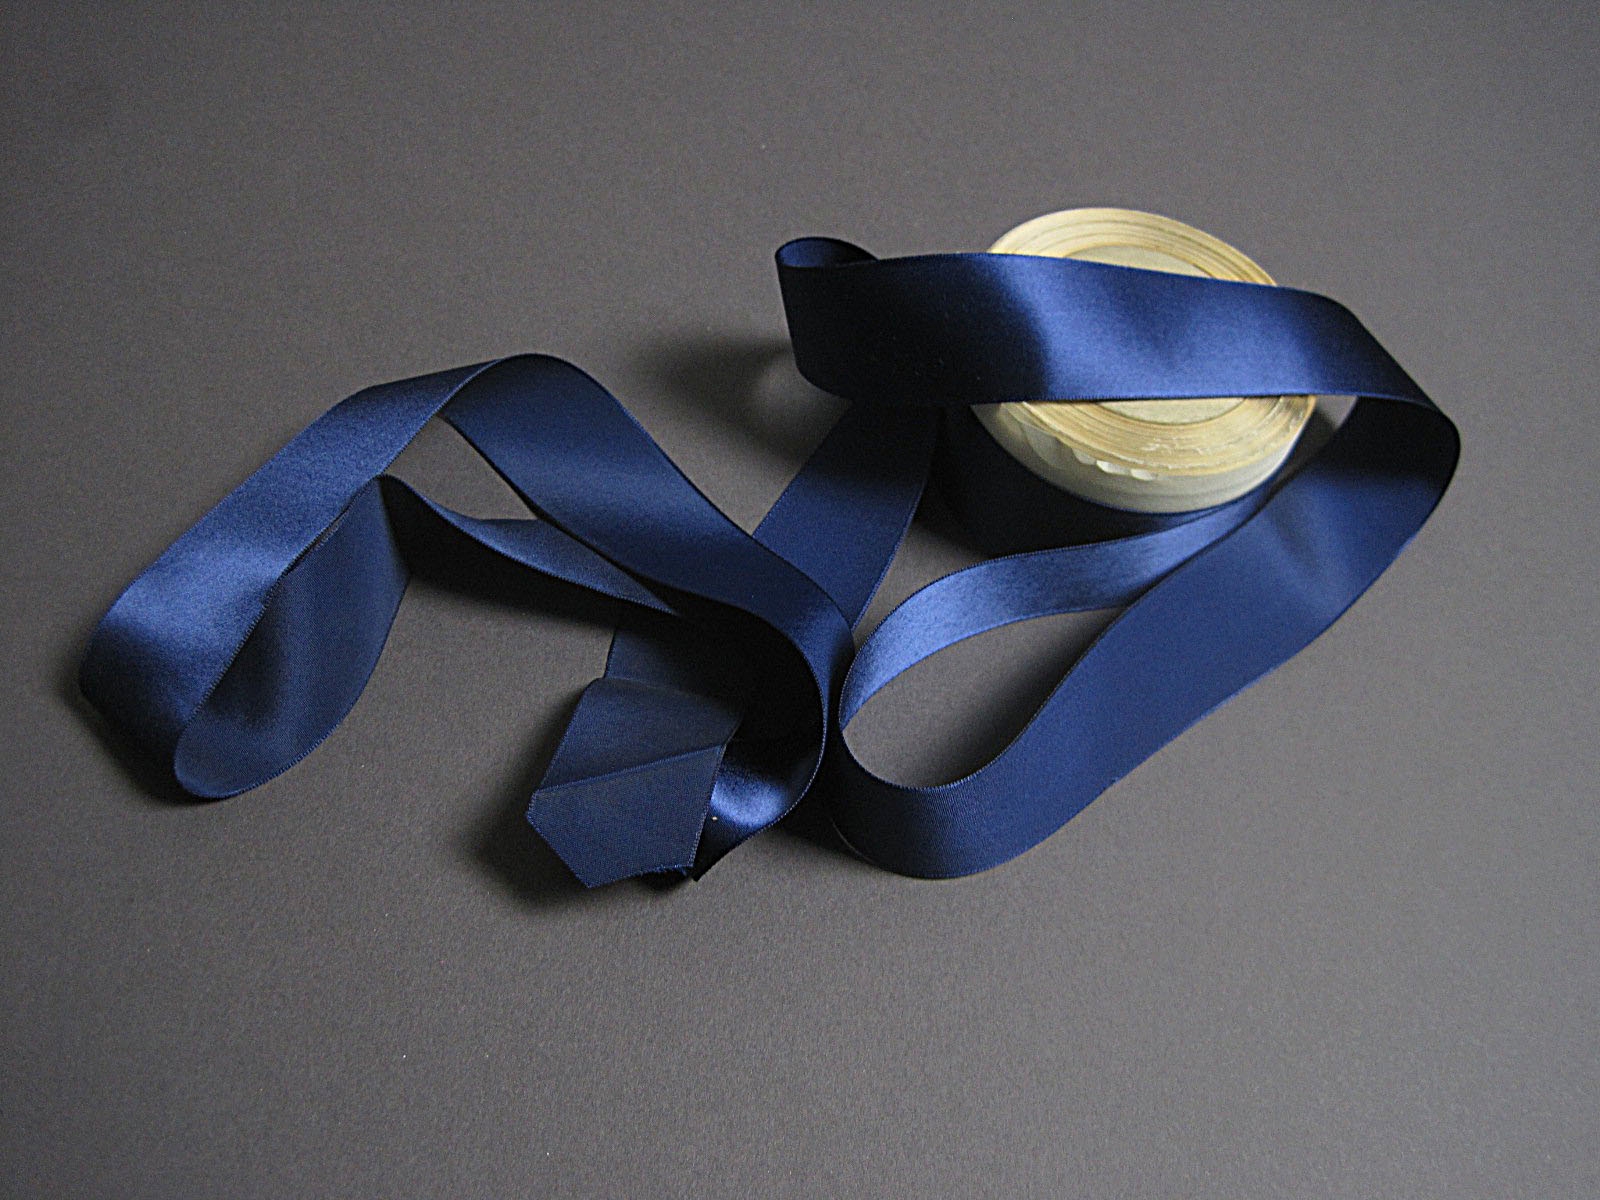 1.5 Navy Blue Star Ribbon